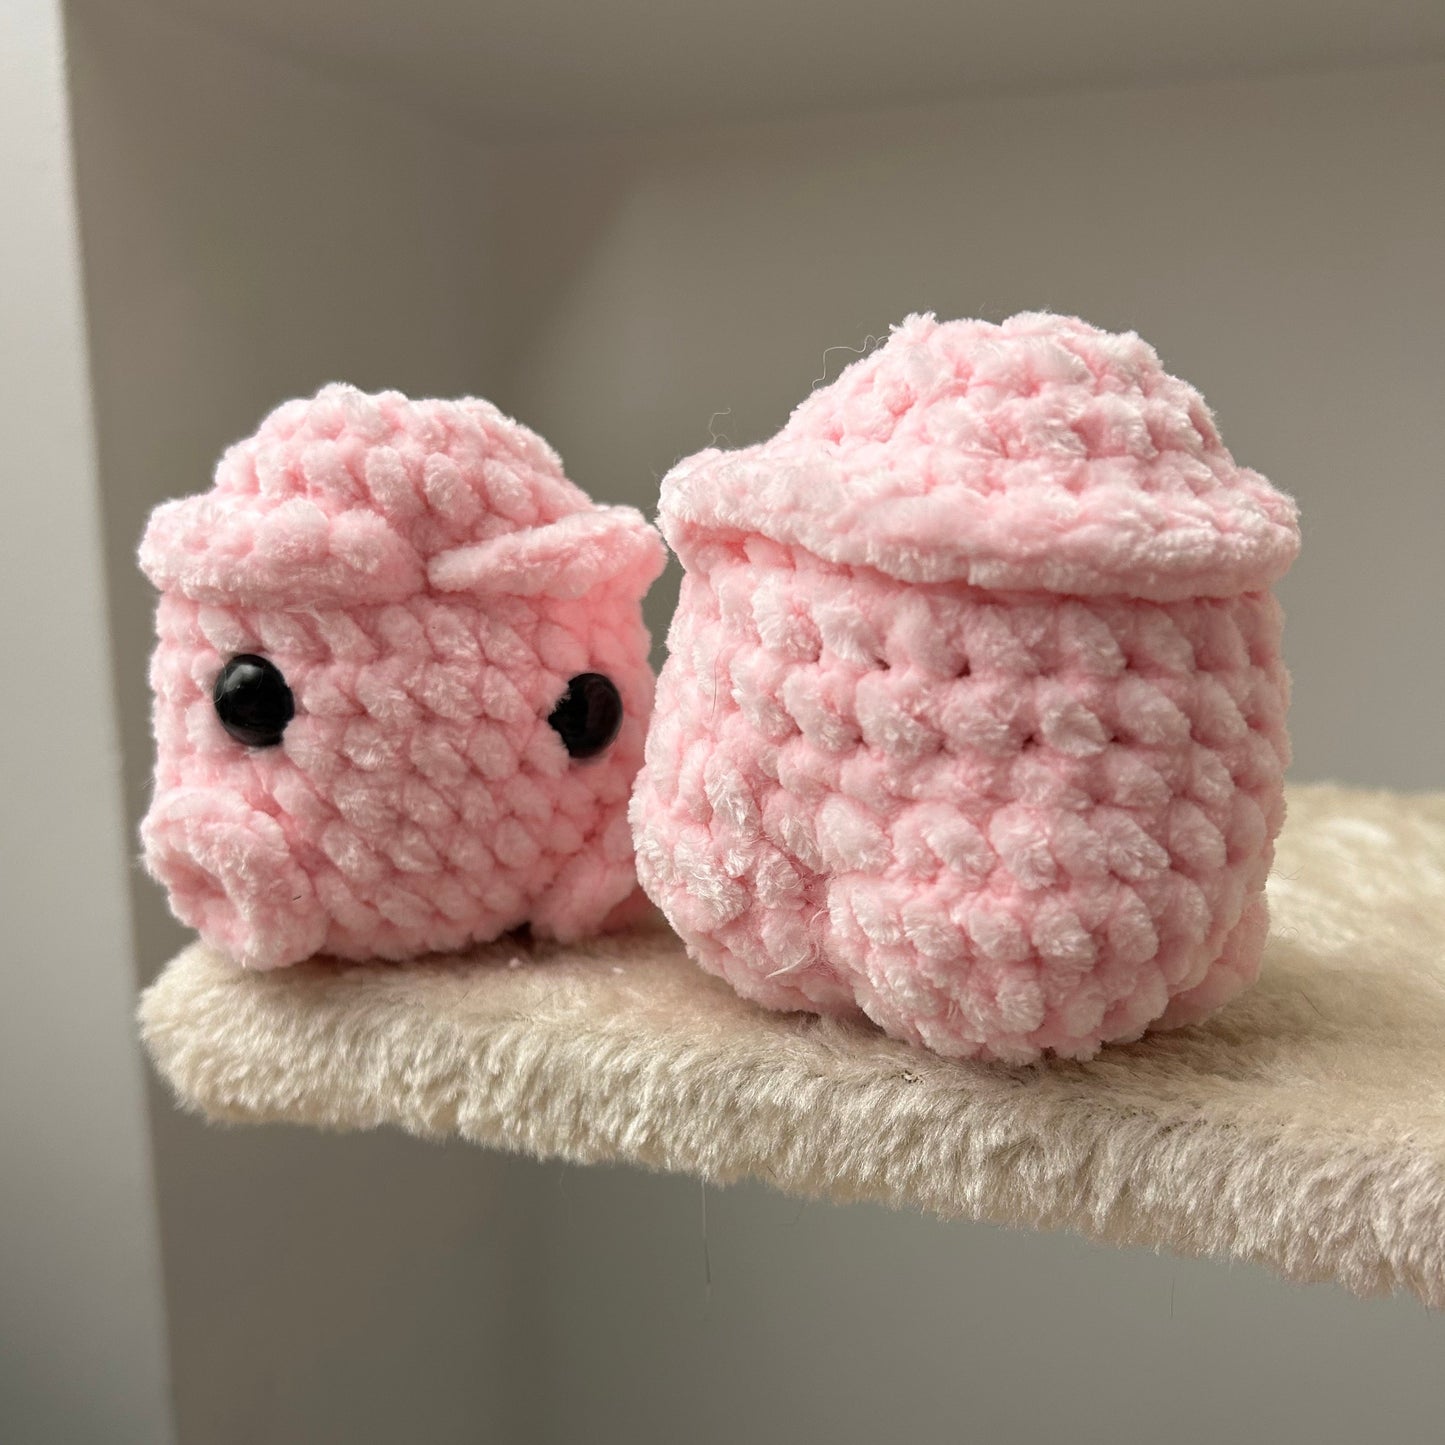 Crochet Chubby (penis) Plushie